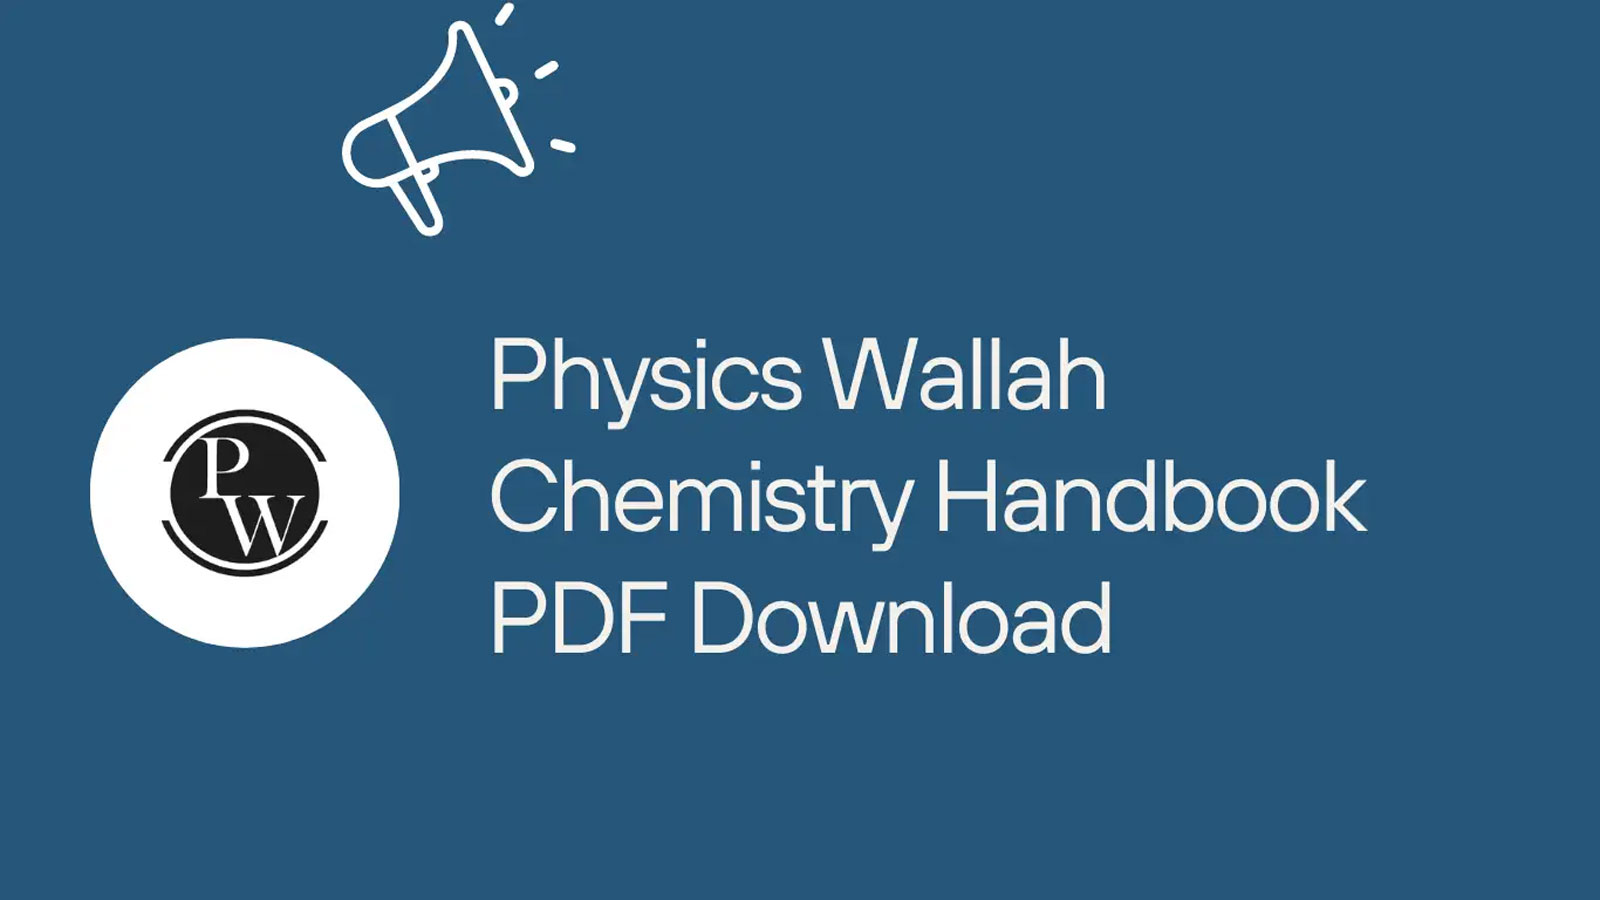 Physics Wallah Chemistry Handbook PDF Download 